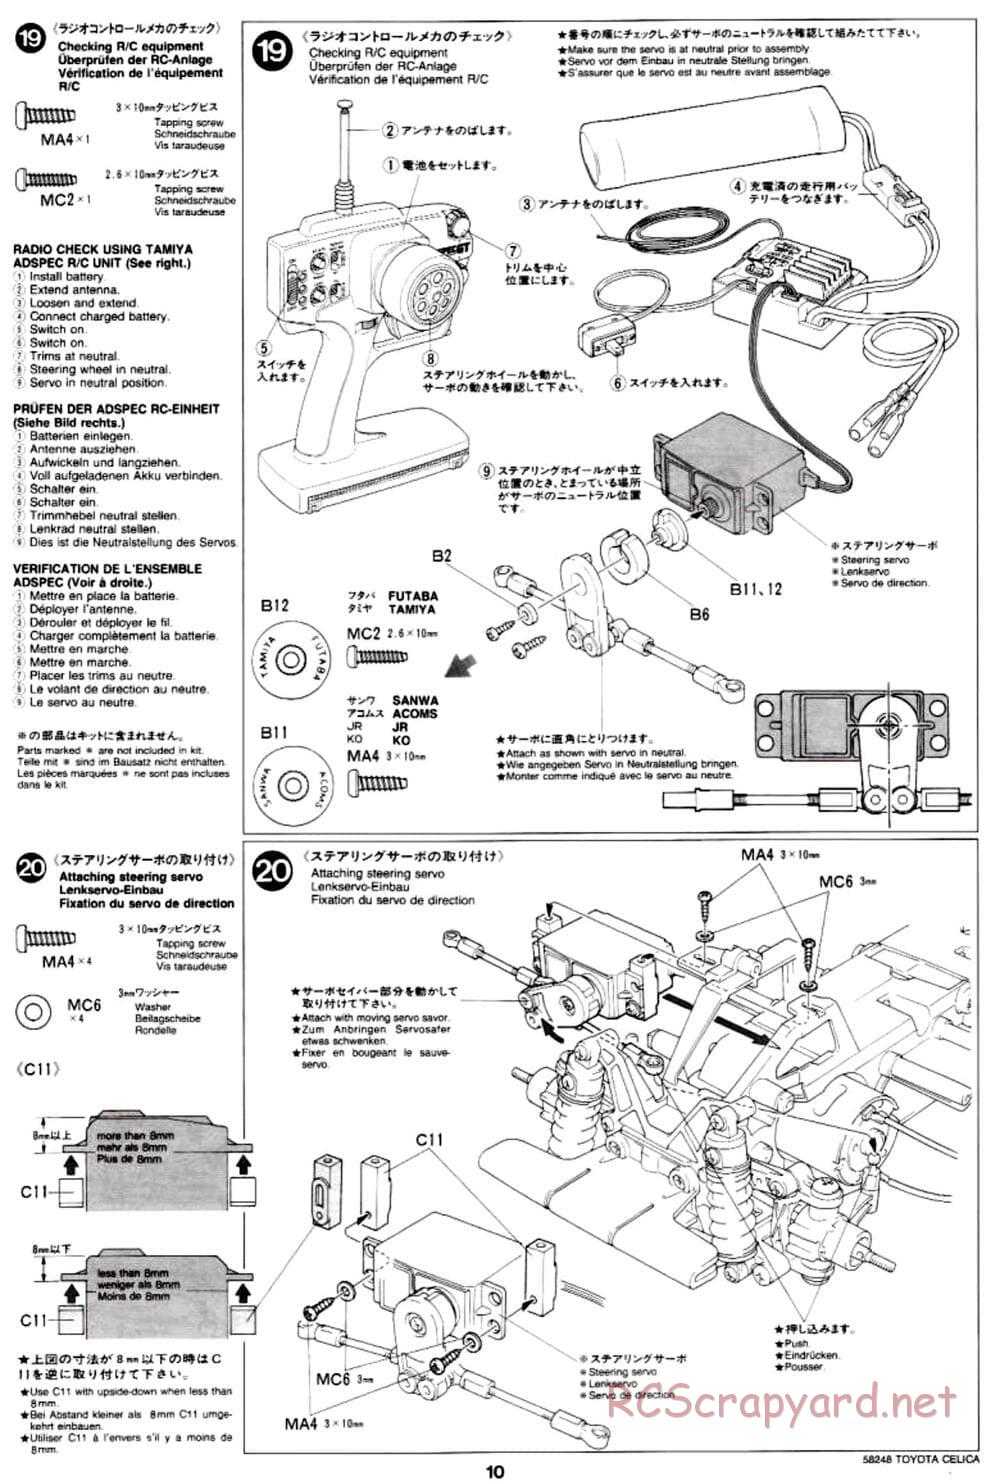 Tamiya - Toyota Celica - FF-02 Chassis - Manual - Page 10